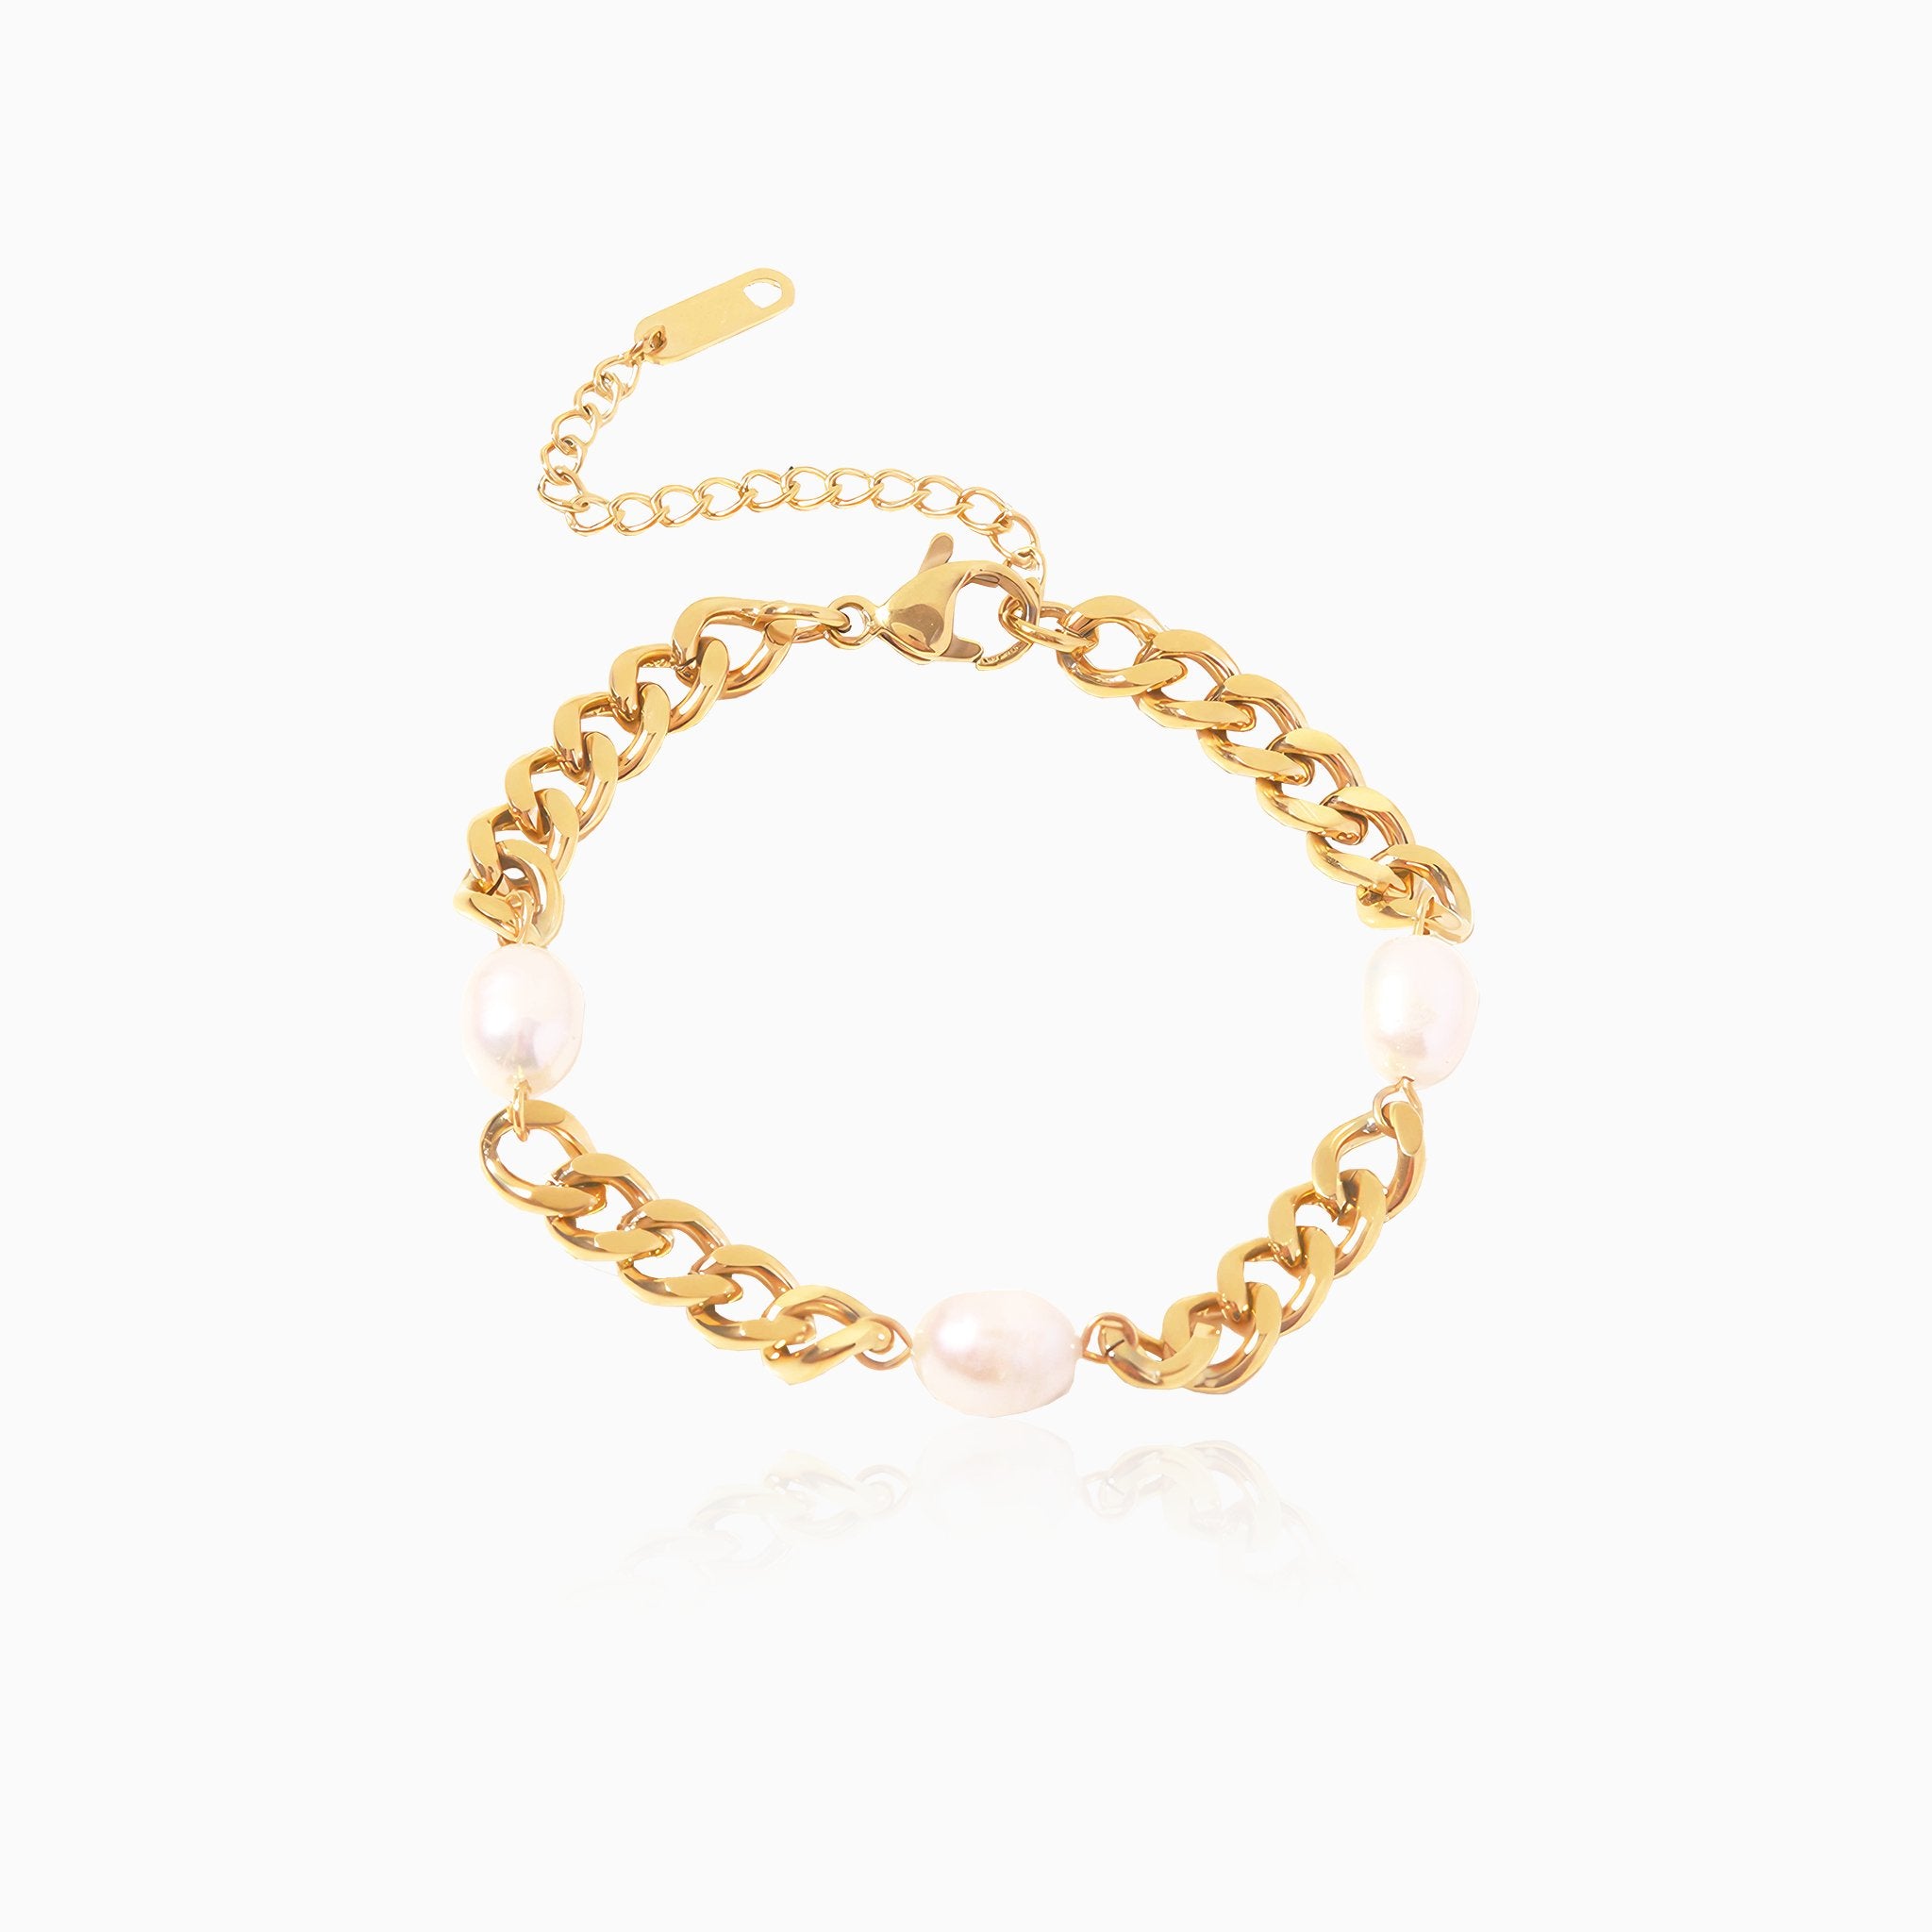 Three Pearls Bracelet - Nobbier - Bracelet - 18K Gold And Titanium PVD Coated Jewelry